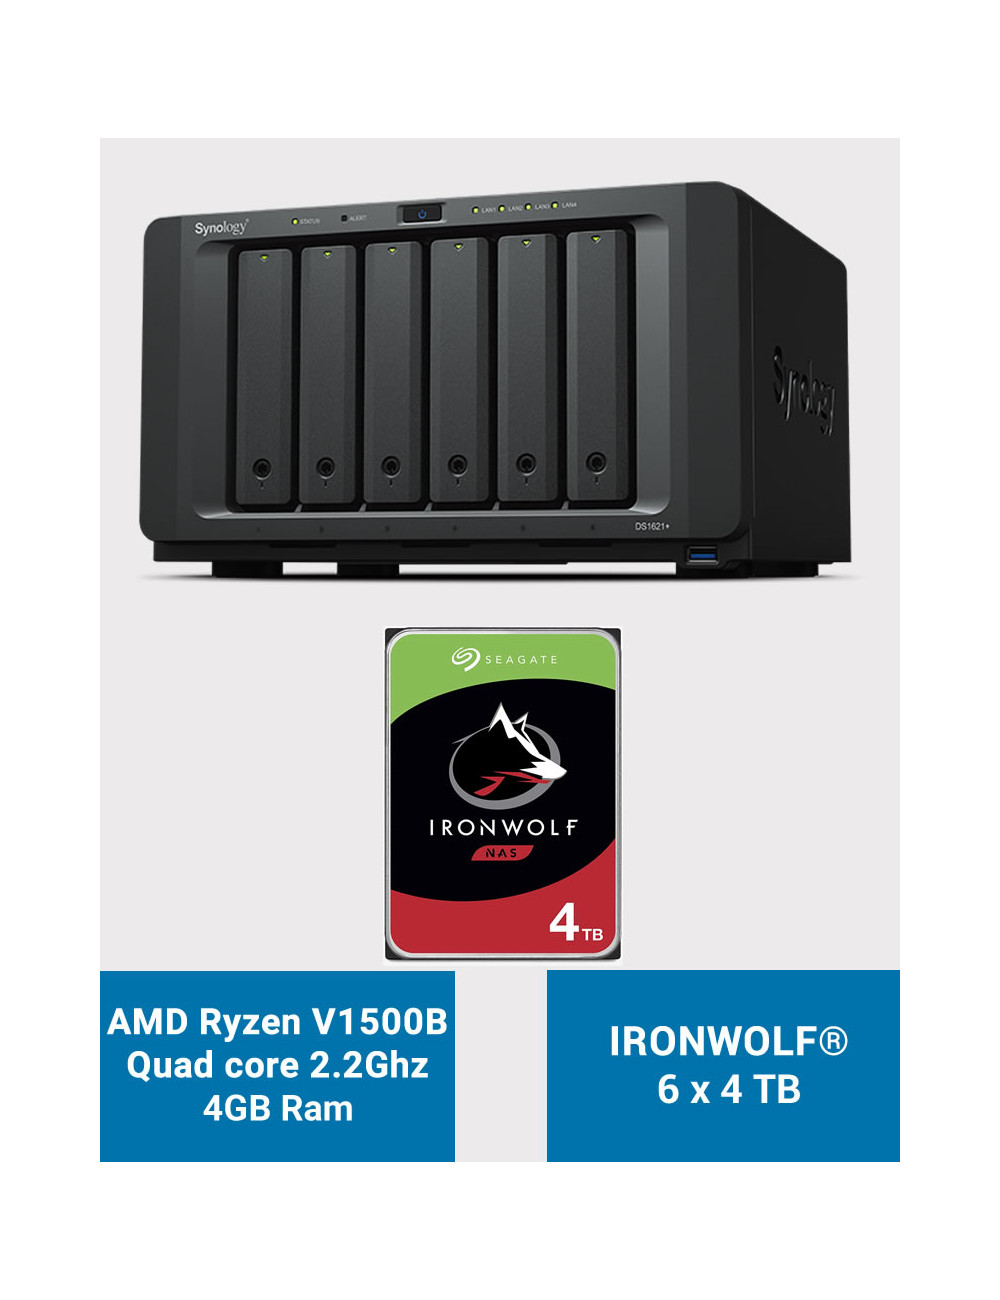 Synology DS1621+ NAS Server IronWolf 24TB (6x4TB)